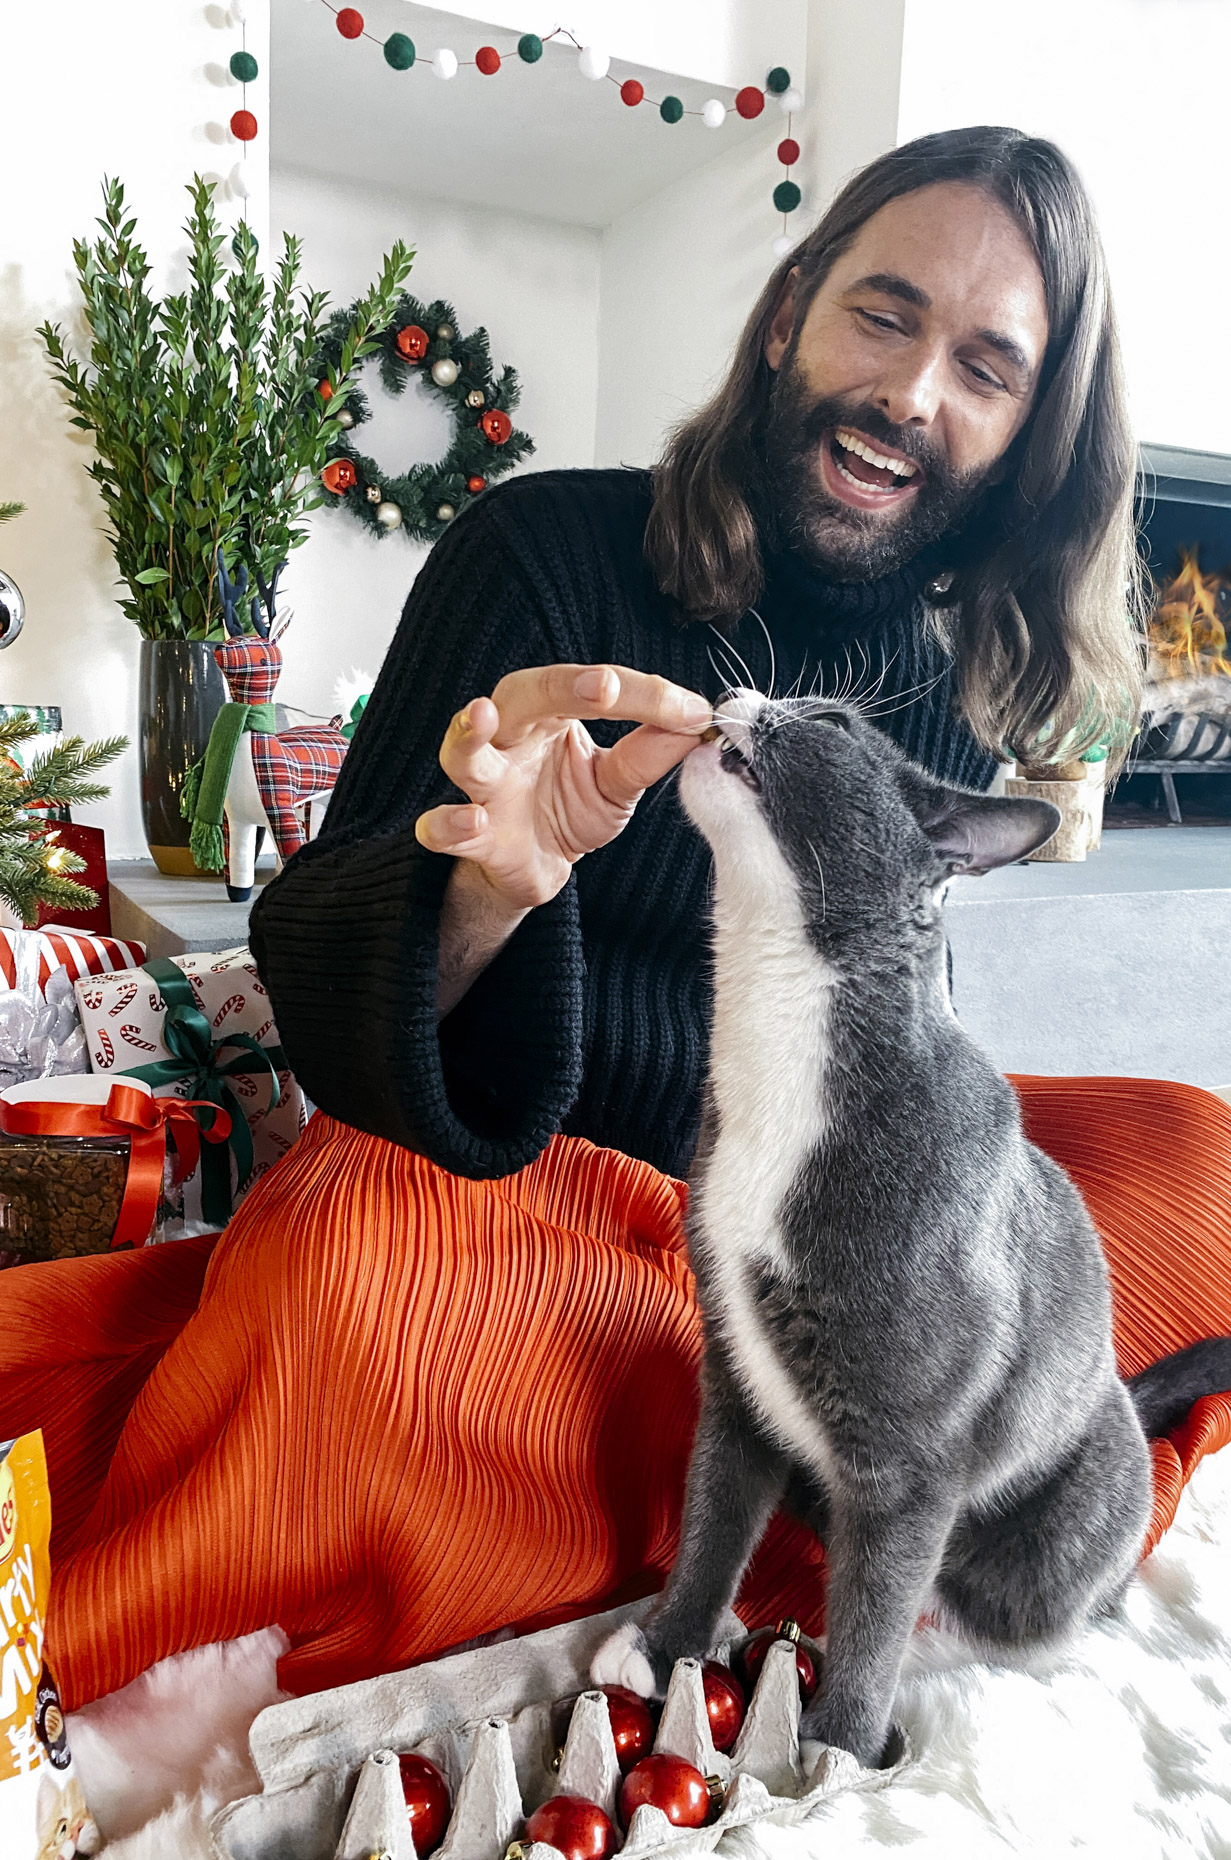 Jonathan Van Ness feeding cat Purina treat at Christmas